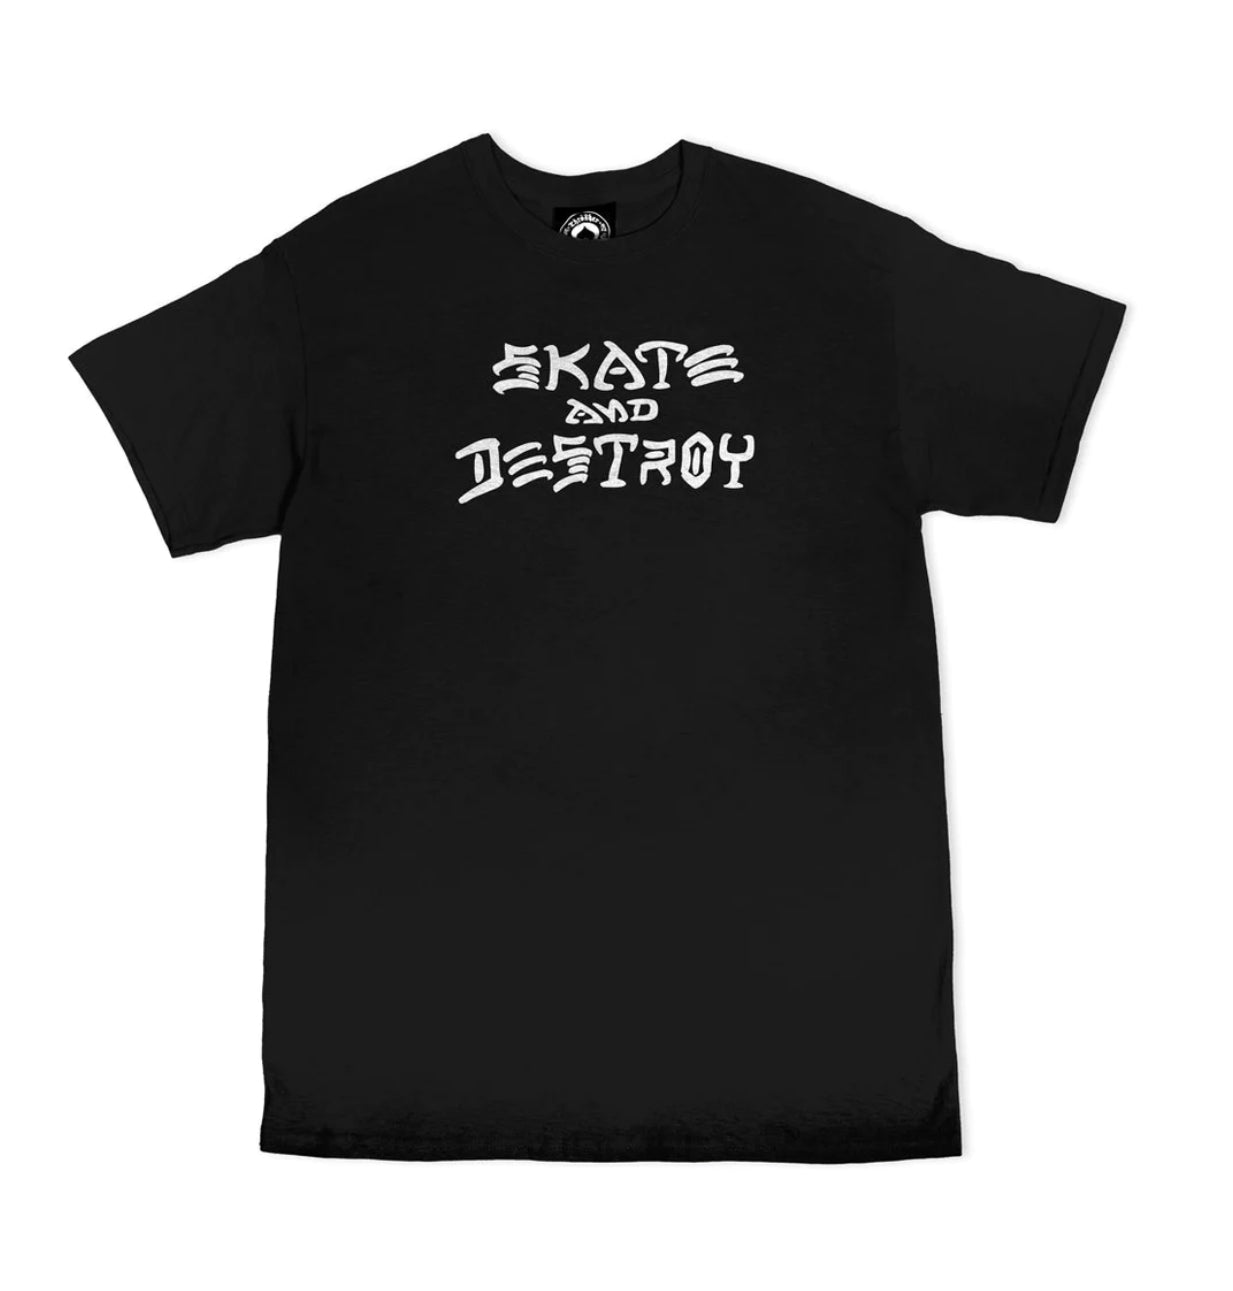 Skate and Destroy Tee Black Shirt